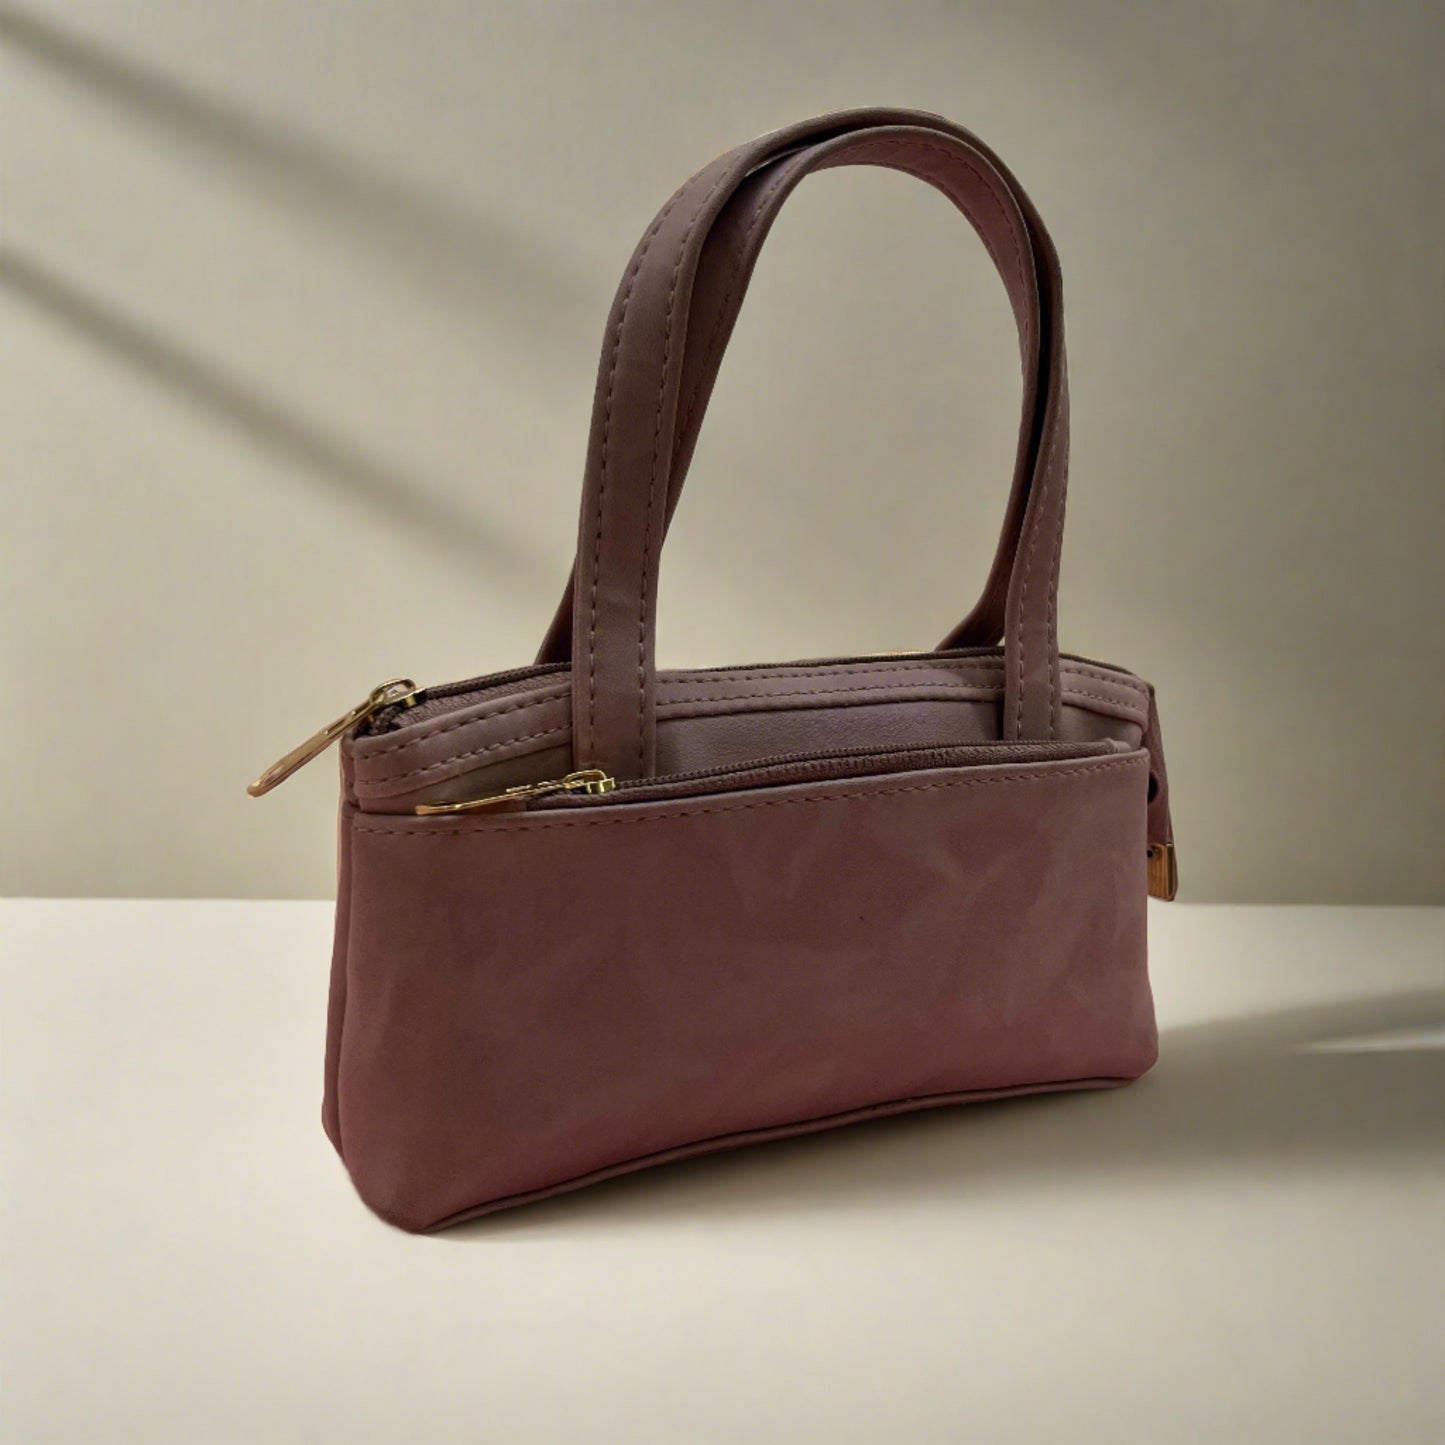 Attractive Women's Small Handbag